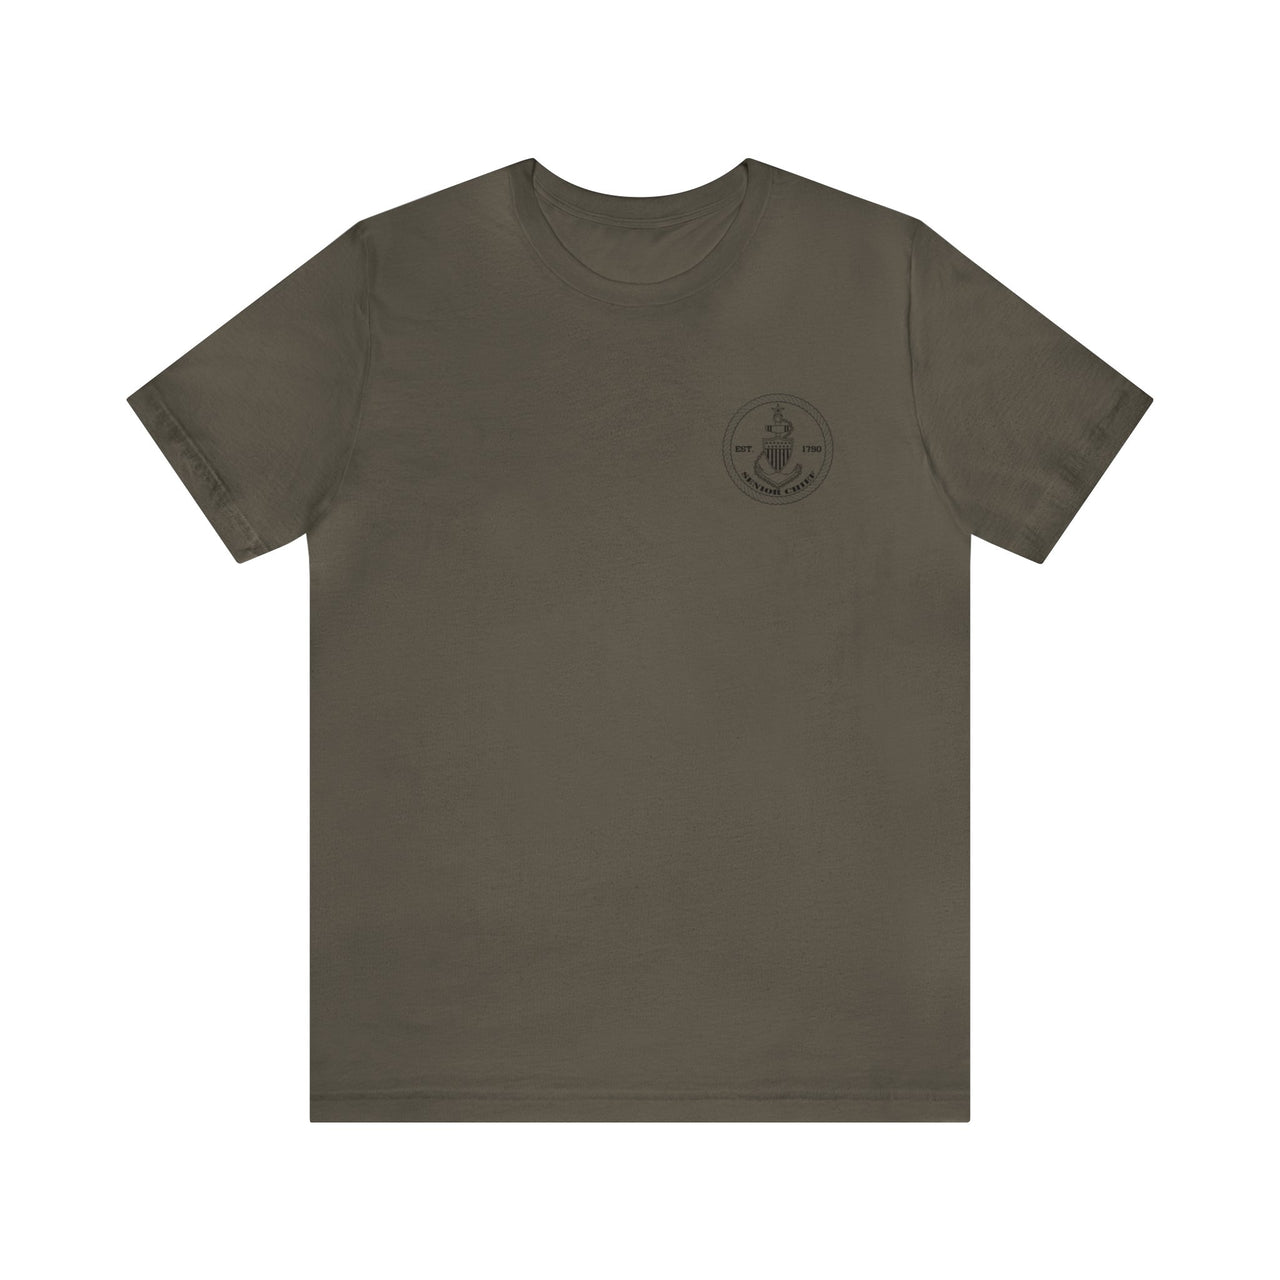 Coast Guard Senior Chief T-Shirt 1790 (Black)